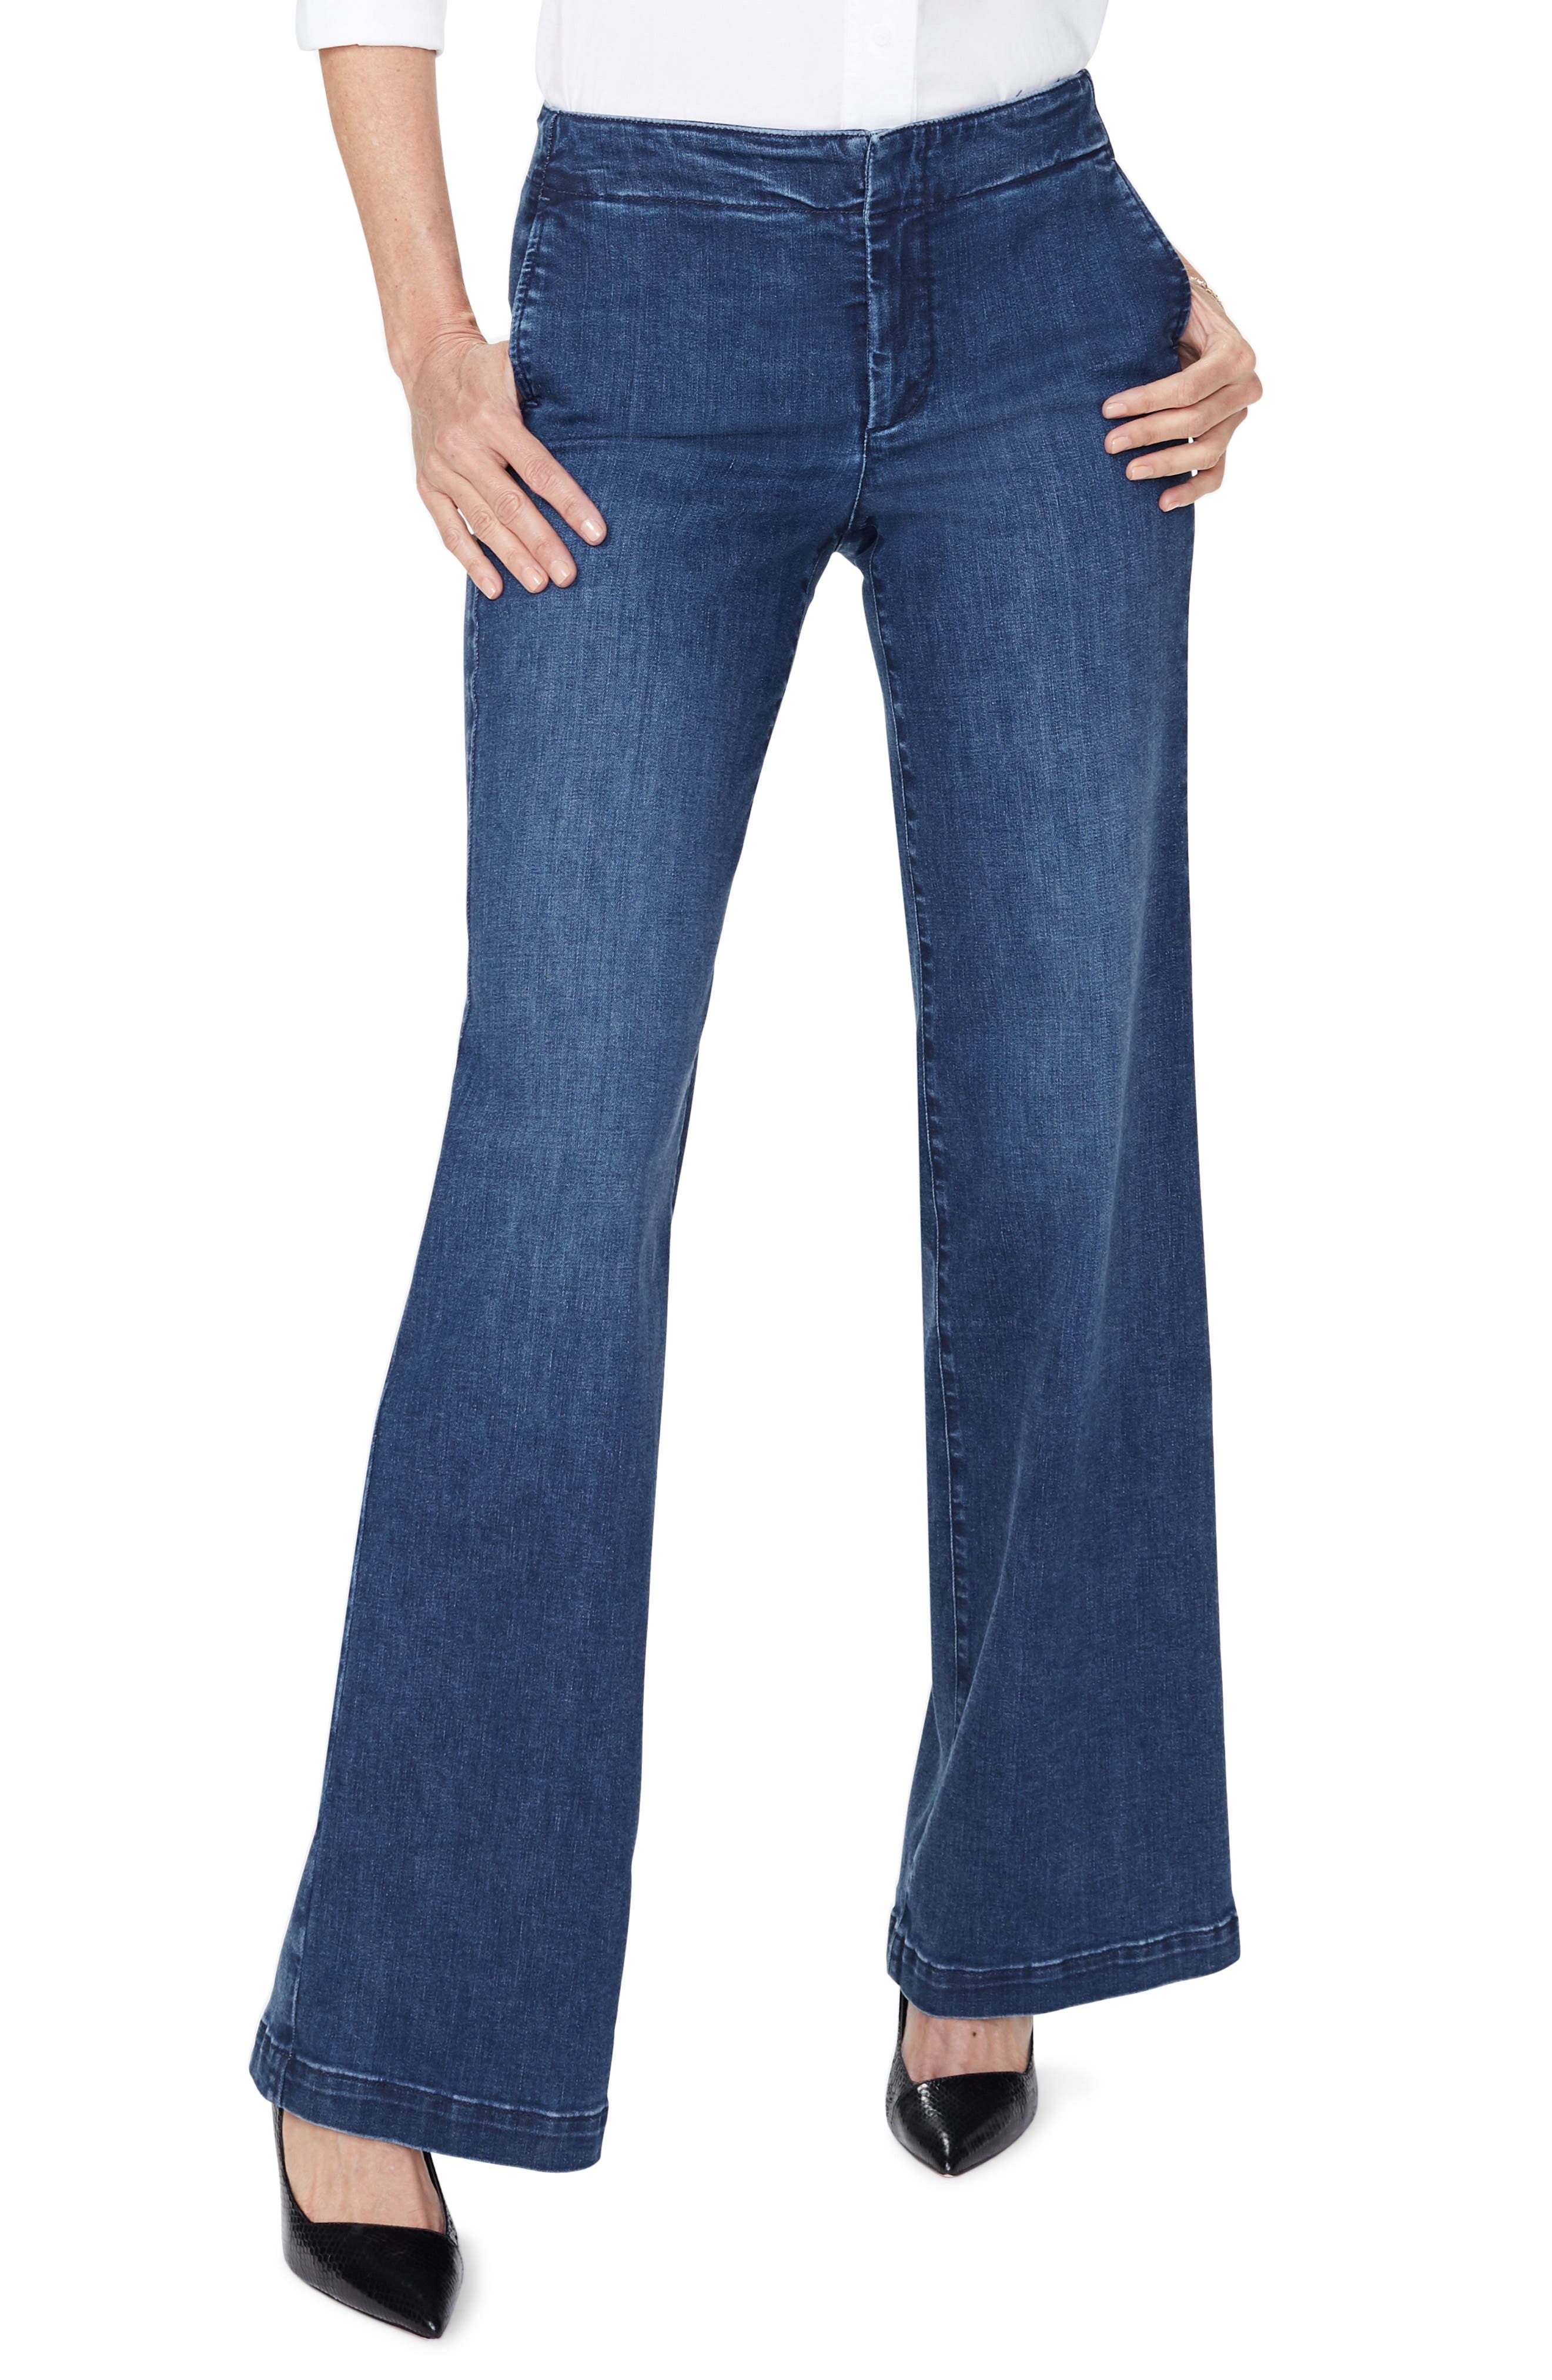 louis vuitton belt with jeans